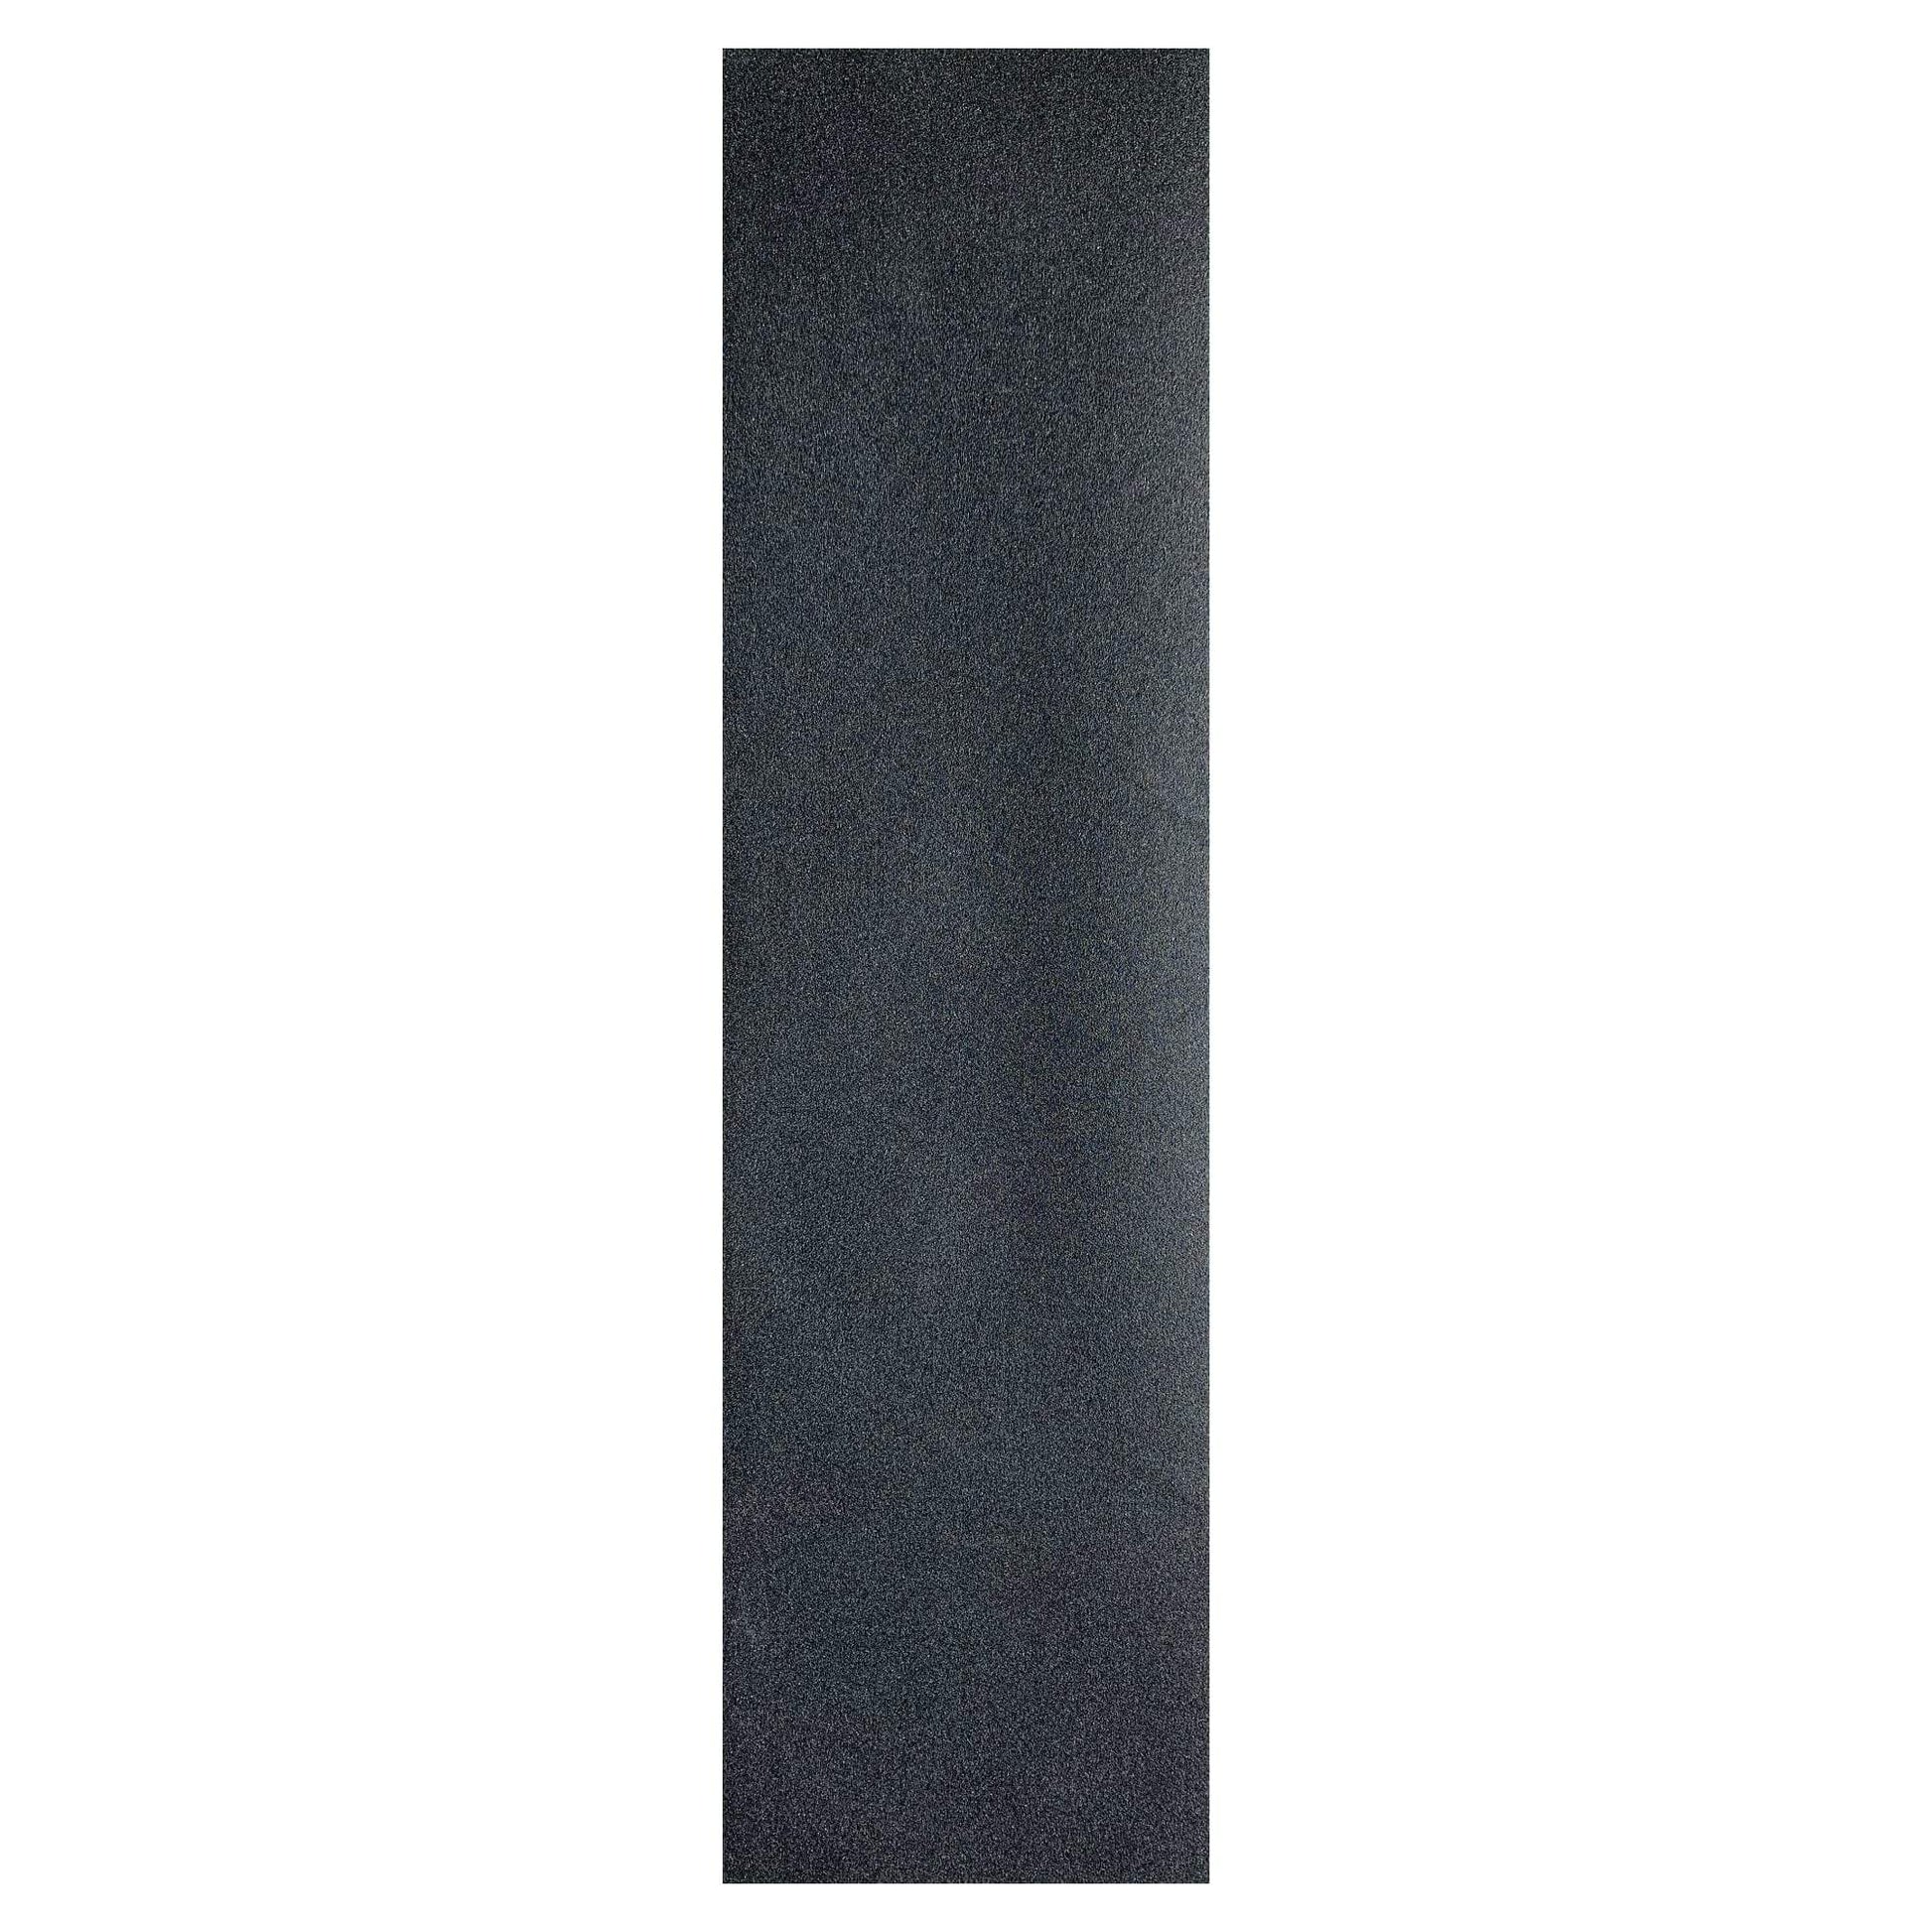 black grip tape for street, cruiser or longboard skateboard 